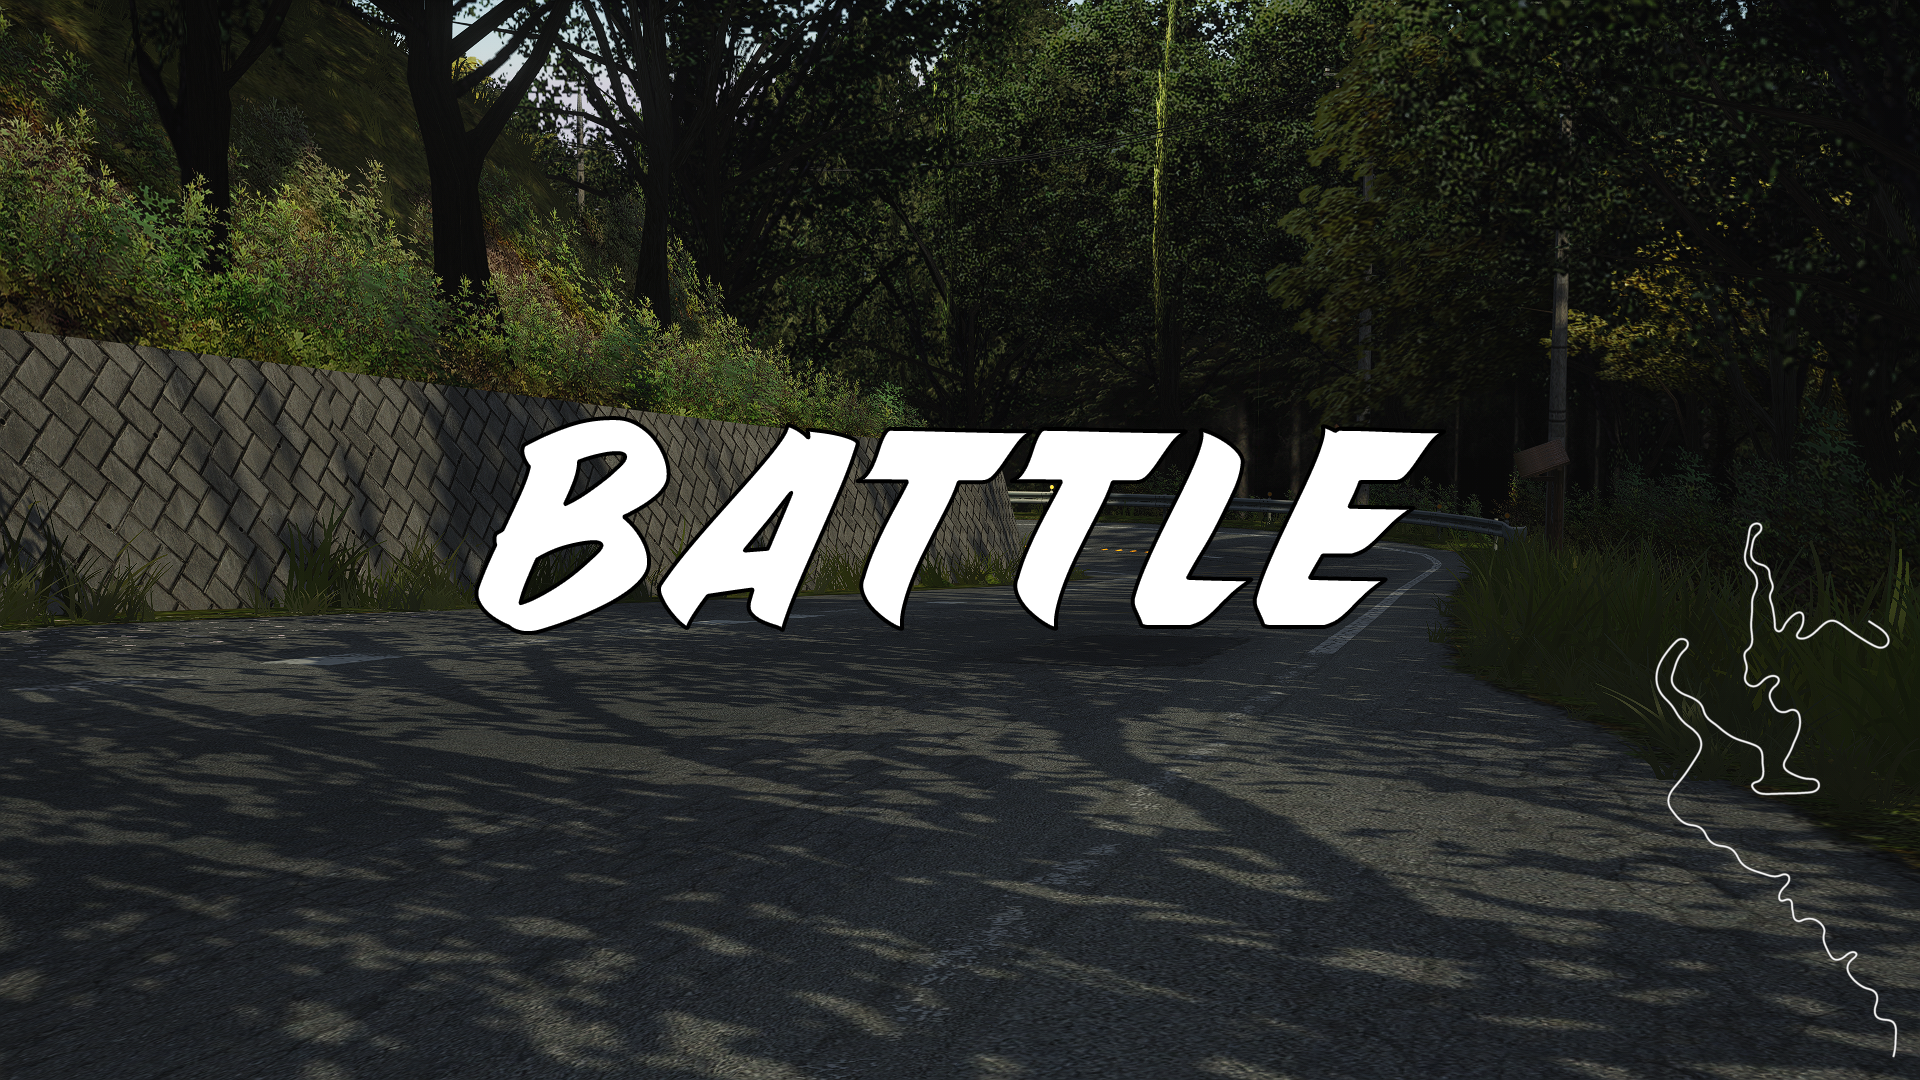 downhill_battle